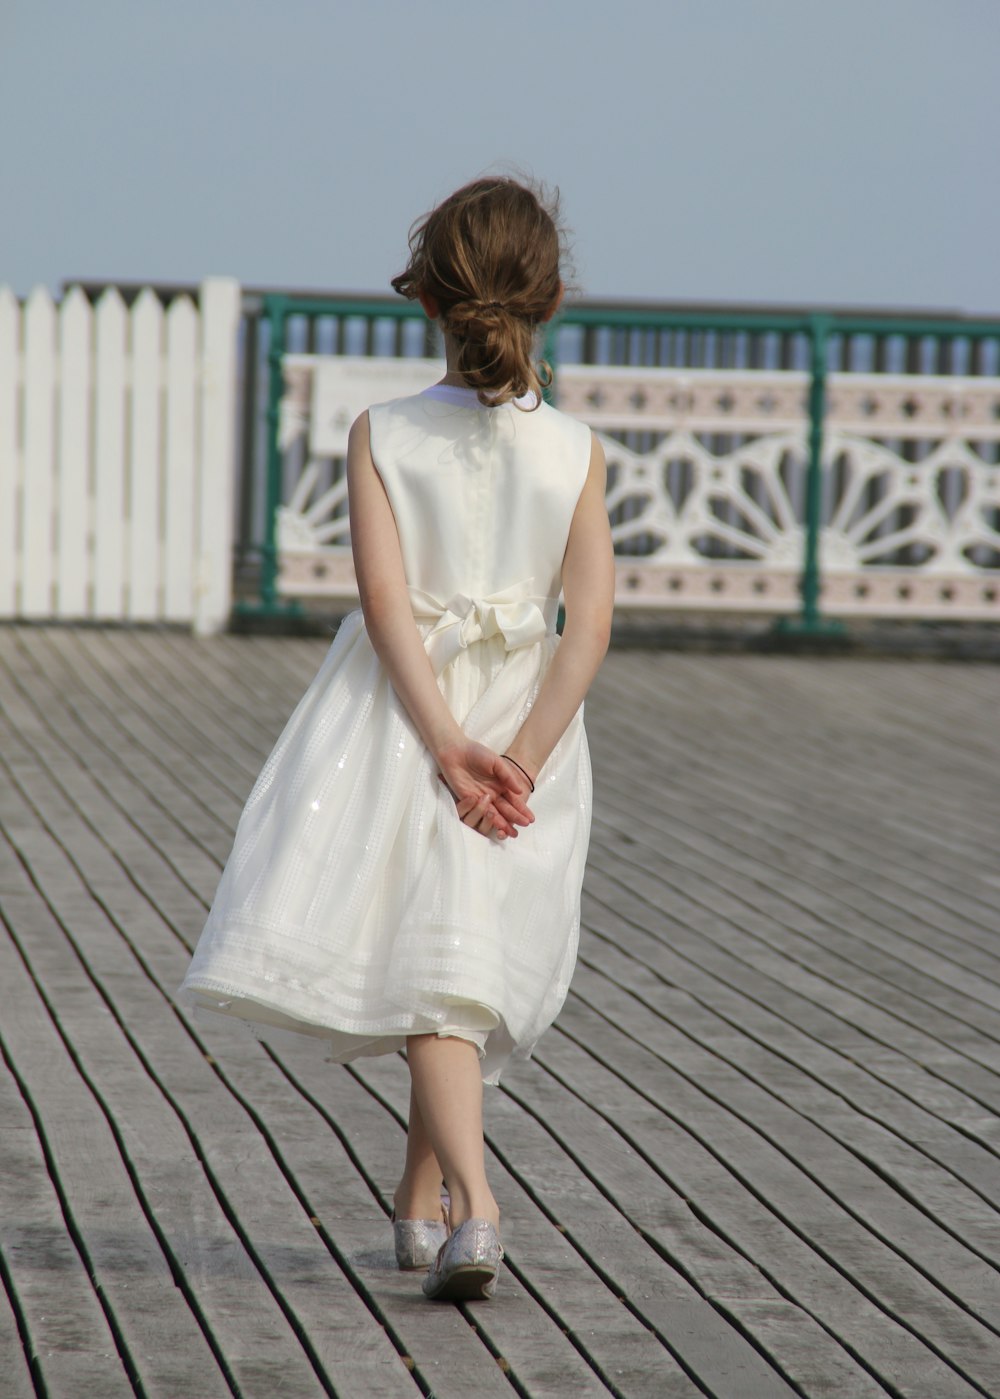 woman in white sleeveless dress standing on gray wooden floor during daytime